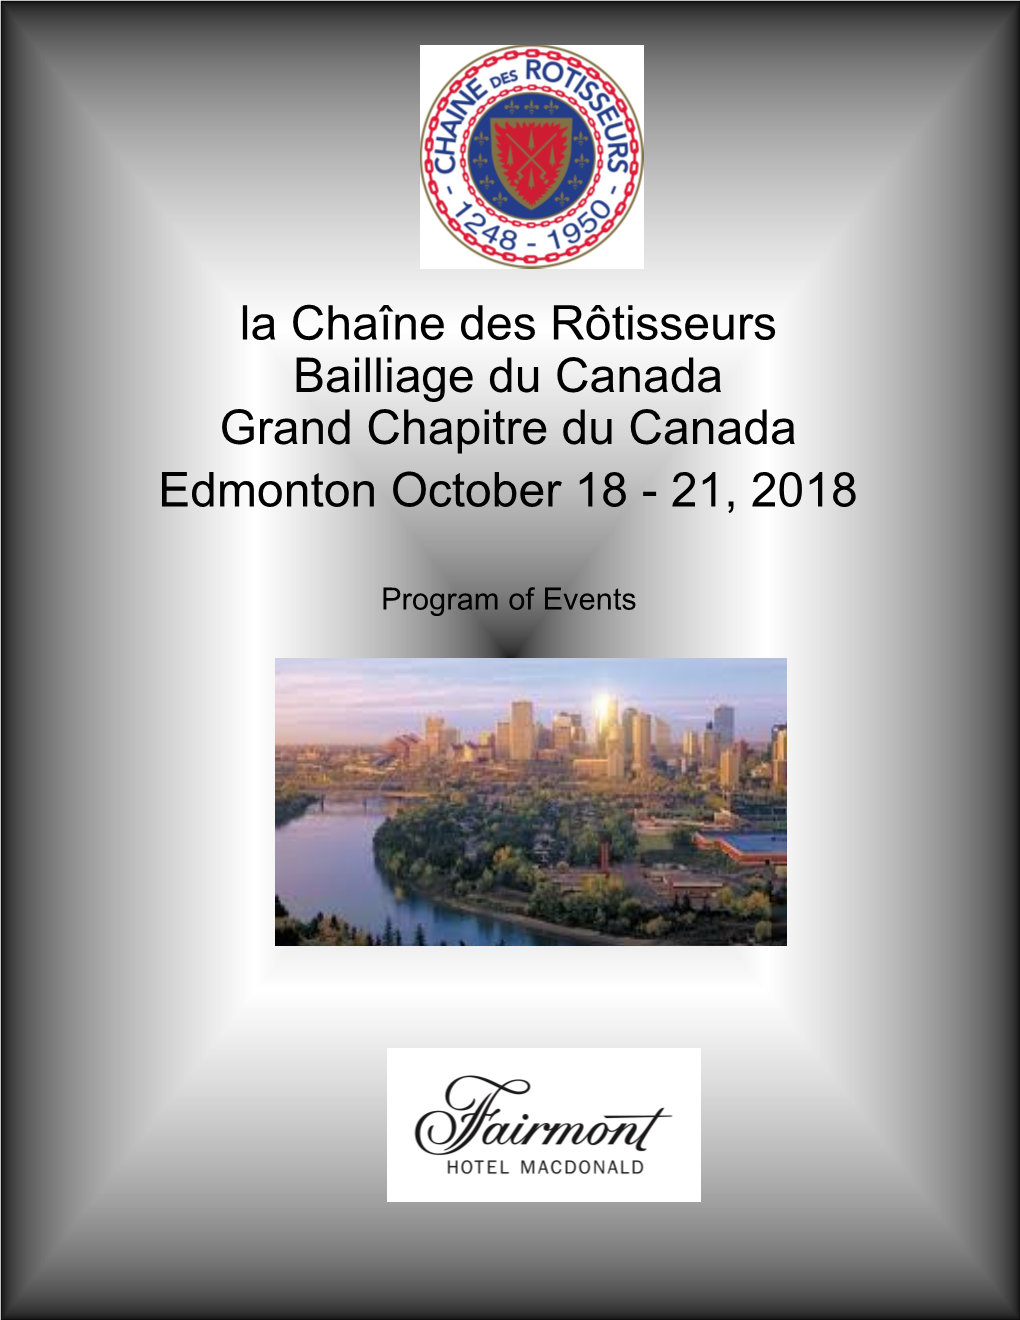 La Chaîne Des Rôtisseurs Bailliage Du Canada Grand Chapitre Du Canada Edmonton October 18 - 21, 2018